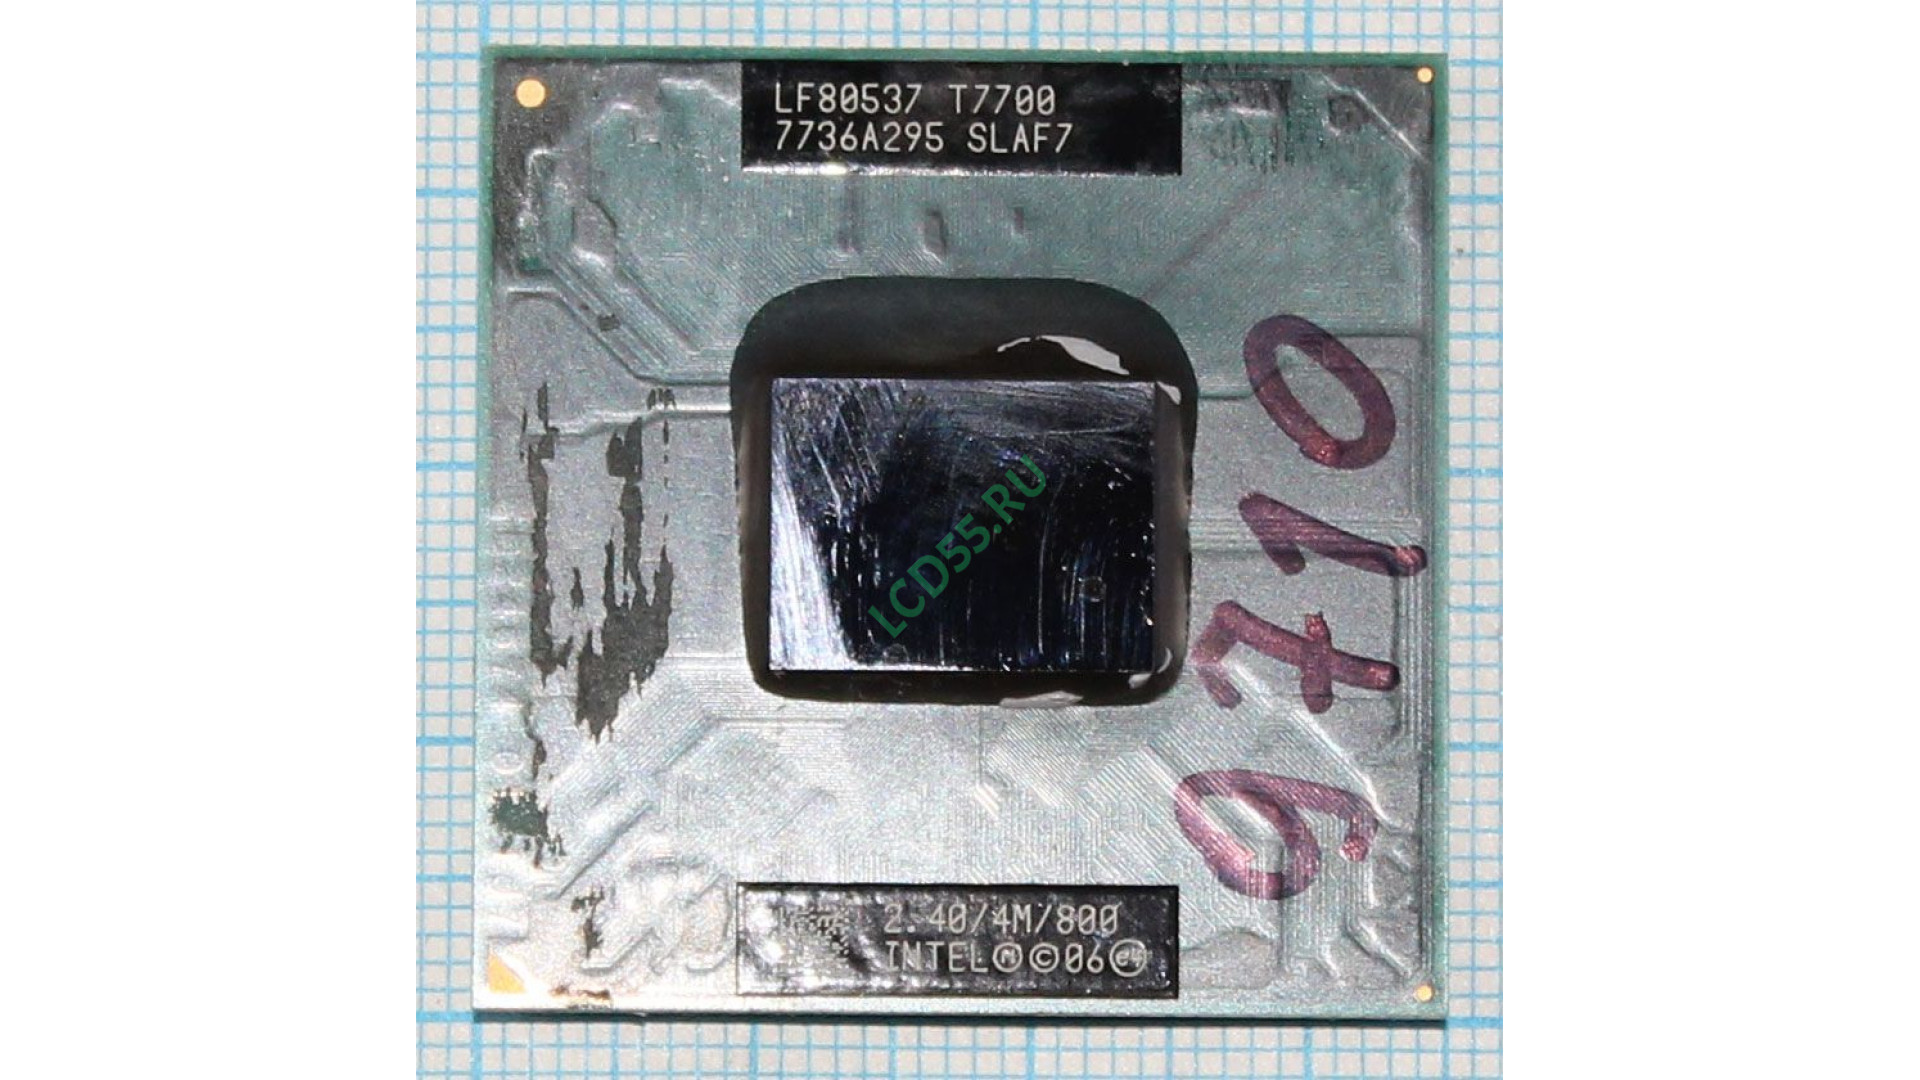 Intel Core 2 Duo T7700 (SLAF7) (4M Cache, 2.40 GHz, 800 MHz FSB) Socket PBGA479, PPGA478